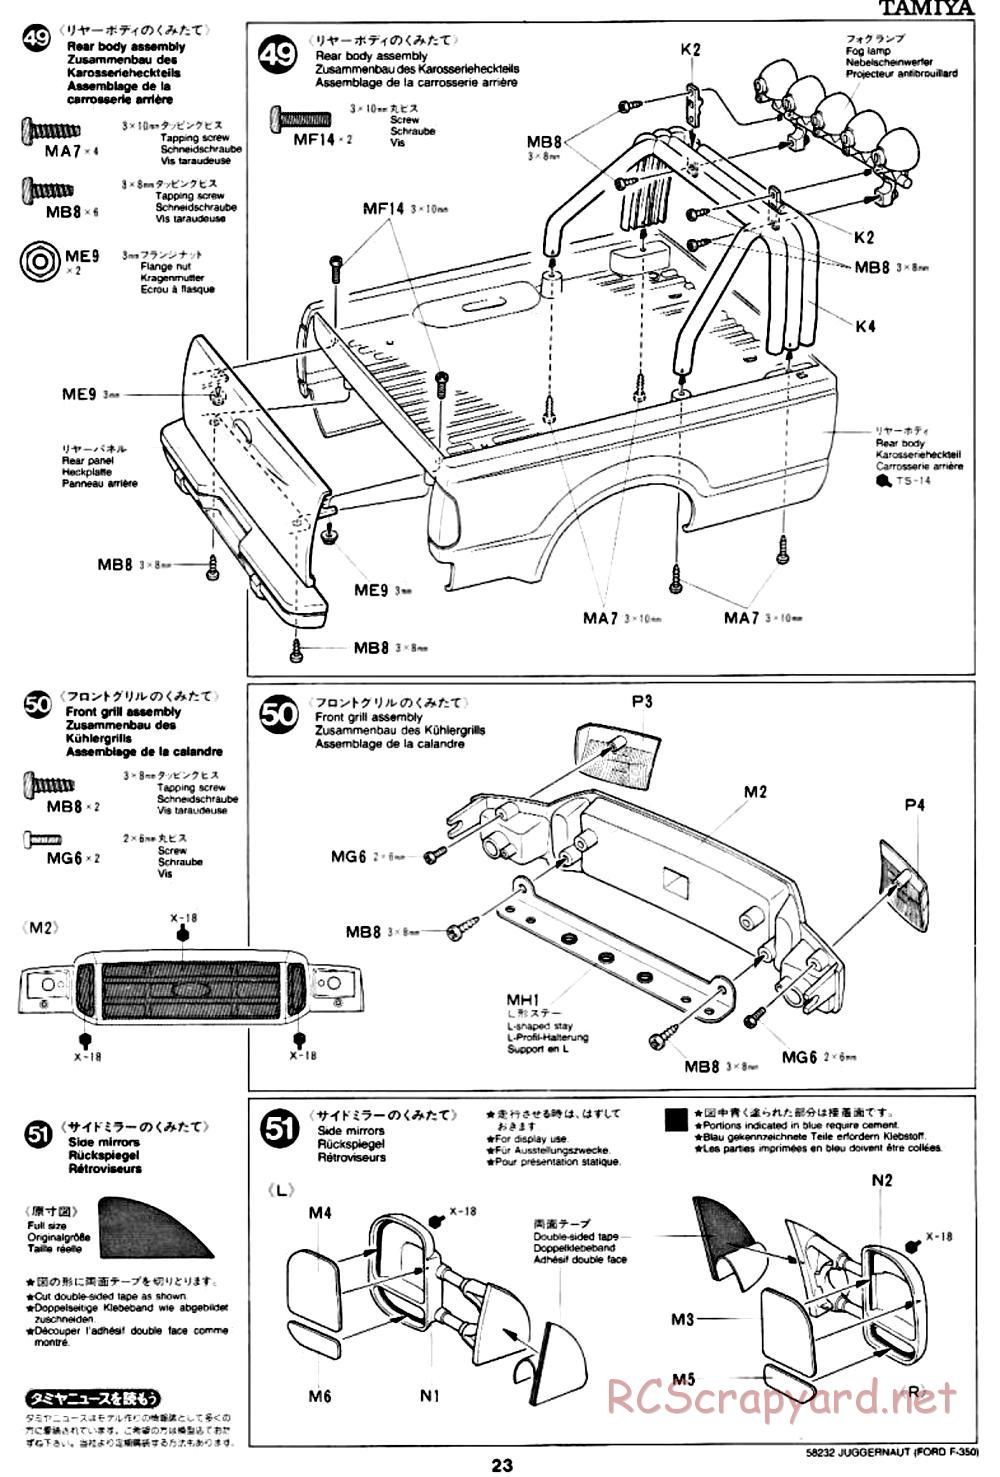 Tamiya - Juggernaut Chassis - Manual - Page 23